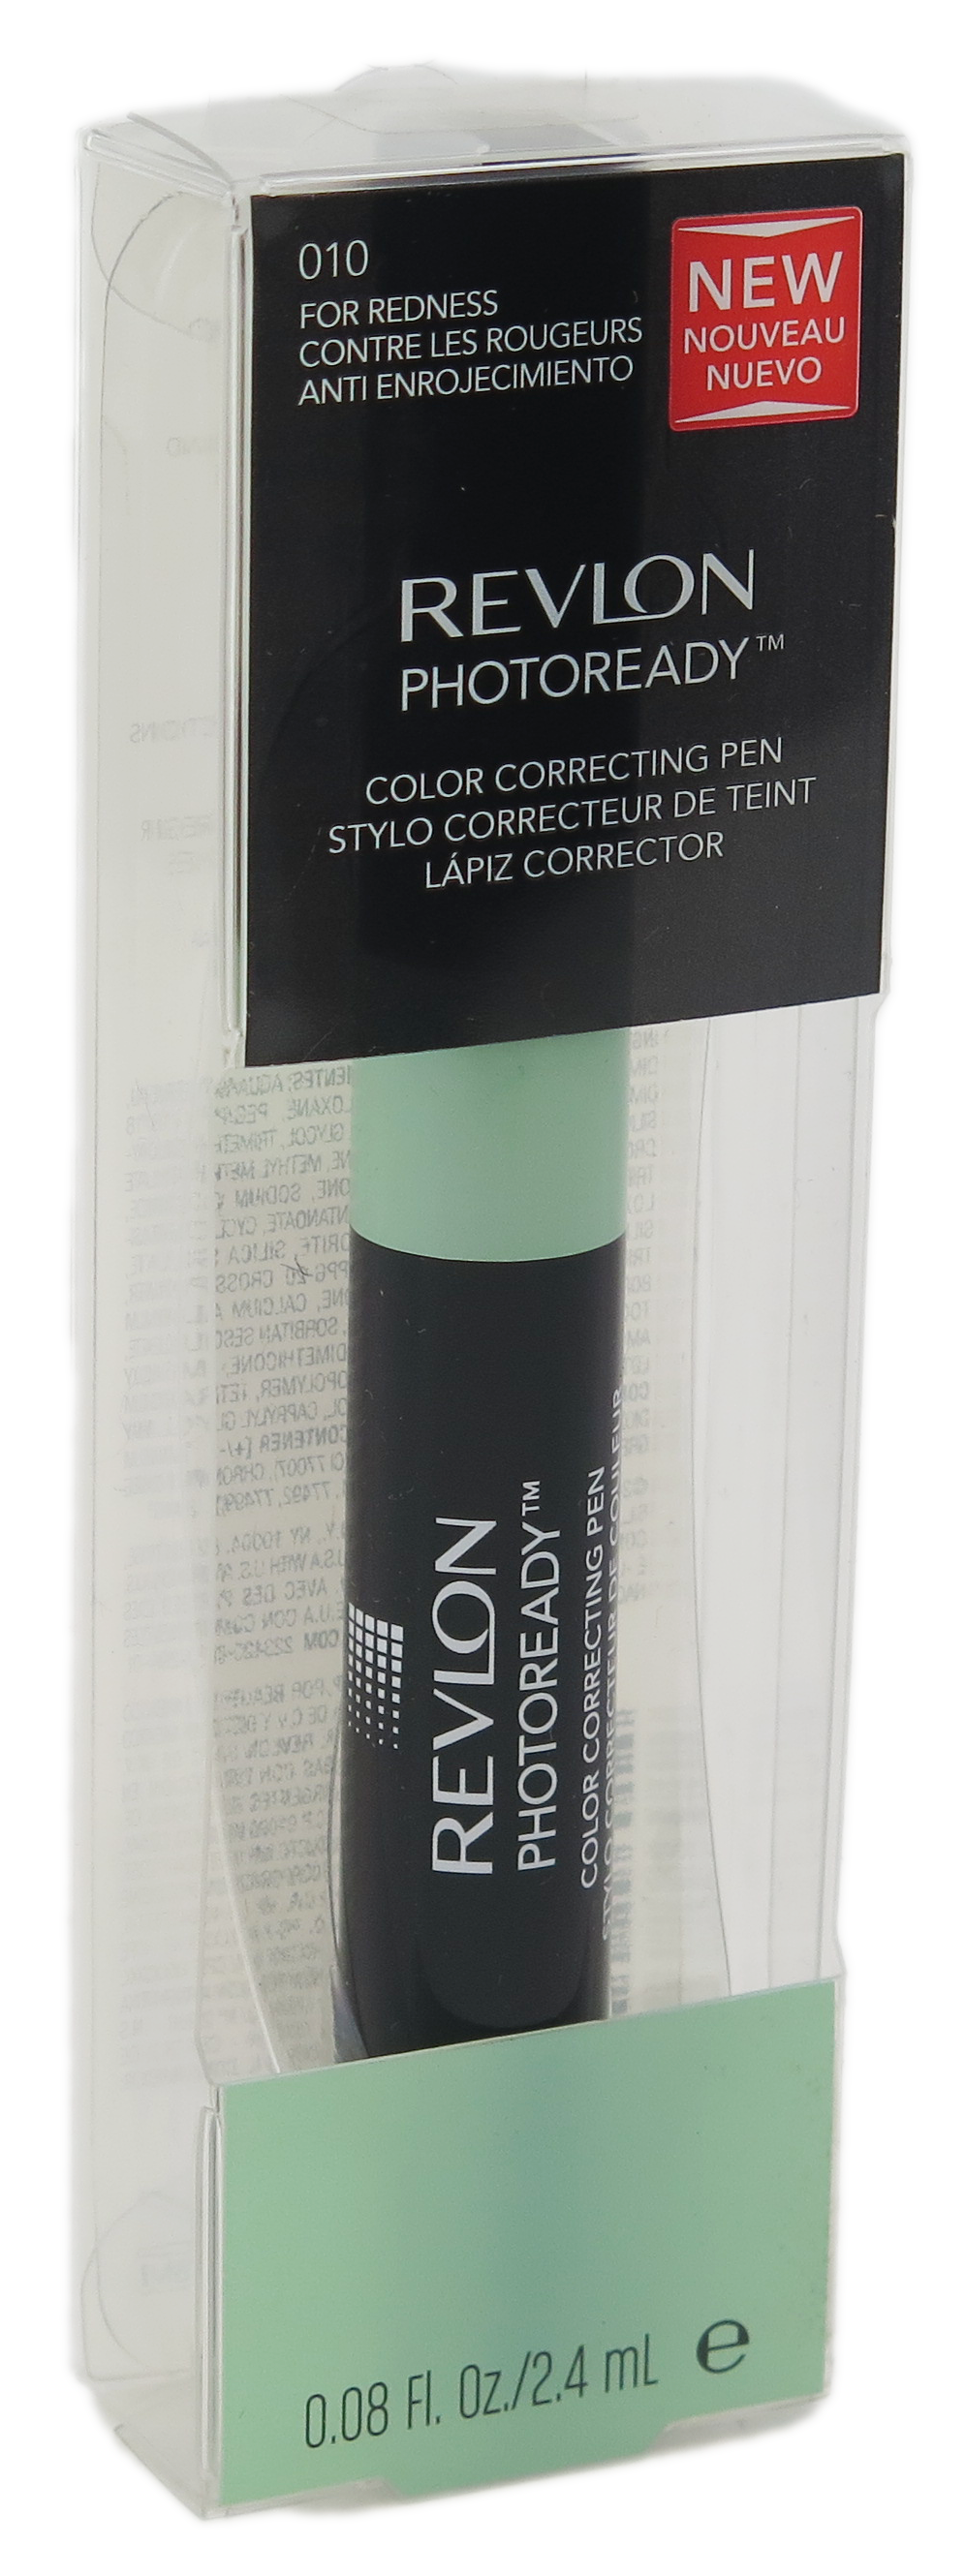 Revlon PhotoReady Color Correcting Pen 0.08 fl oz - Assorted